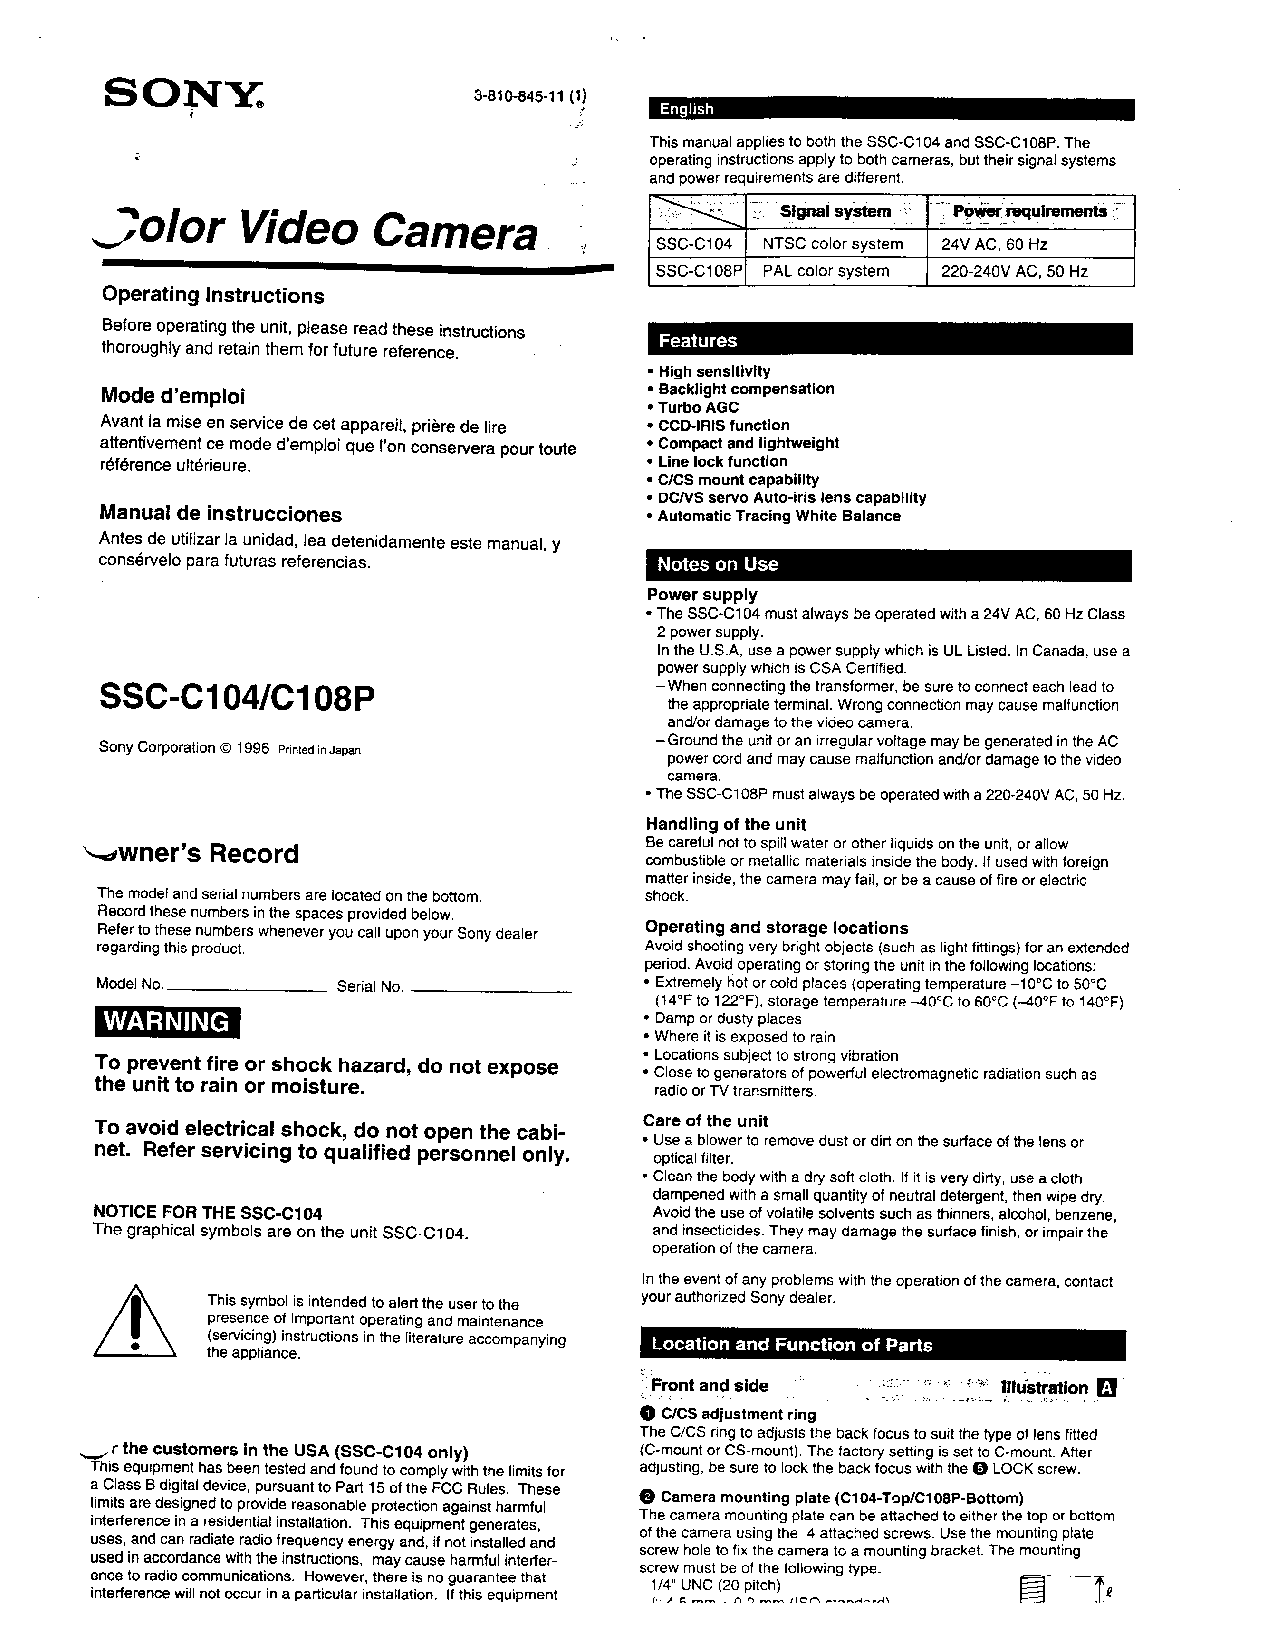 Sony SSC-C104, SSC-C108P User Manual